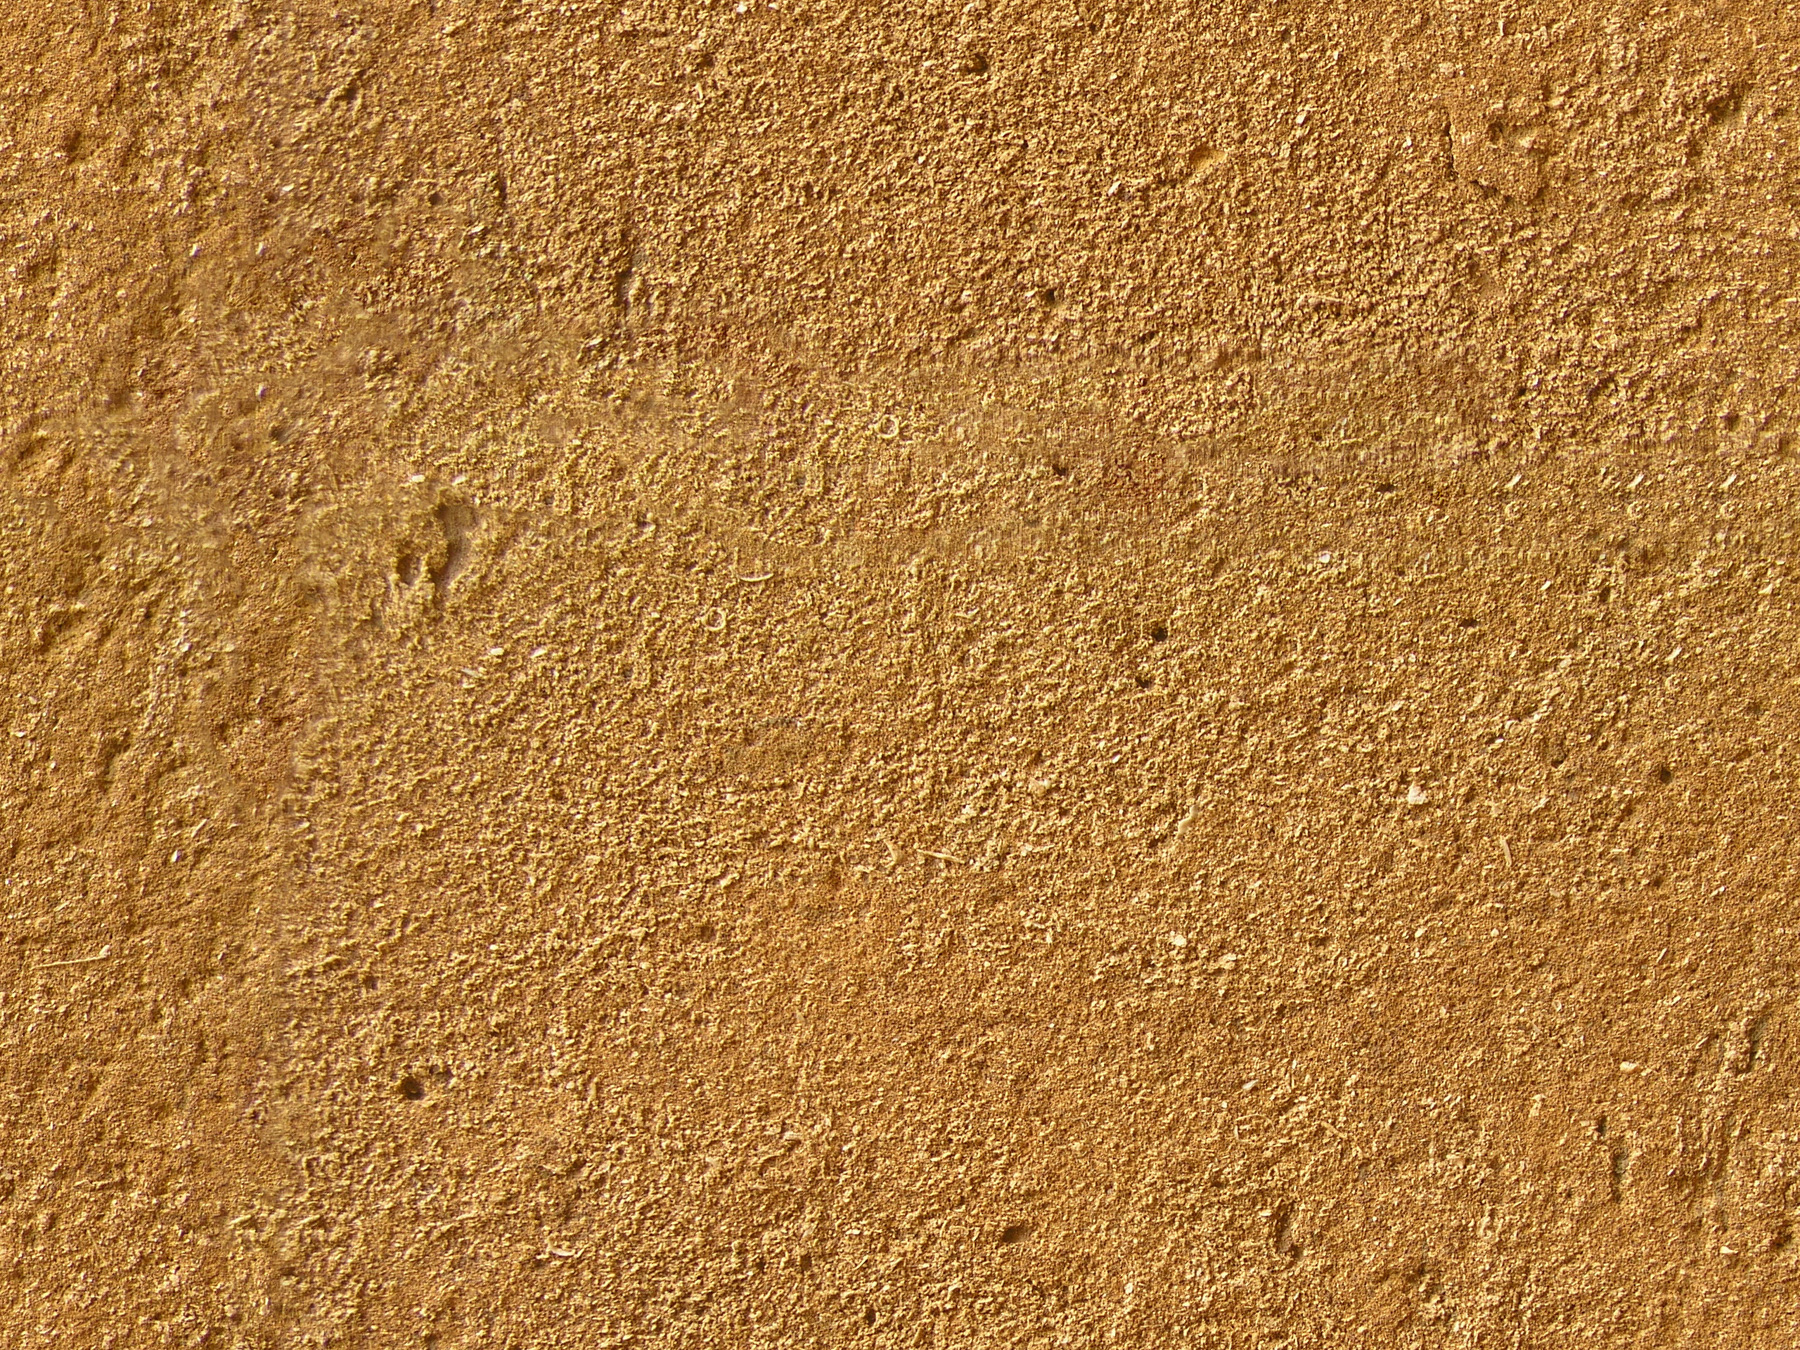 Desert sand texture photo